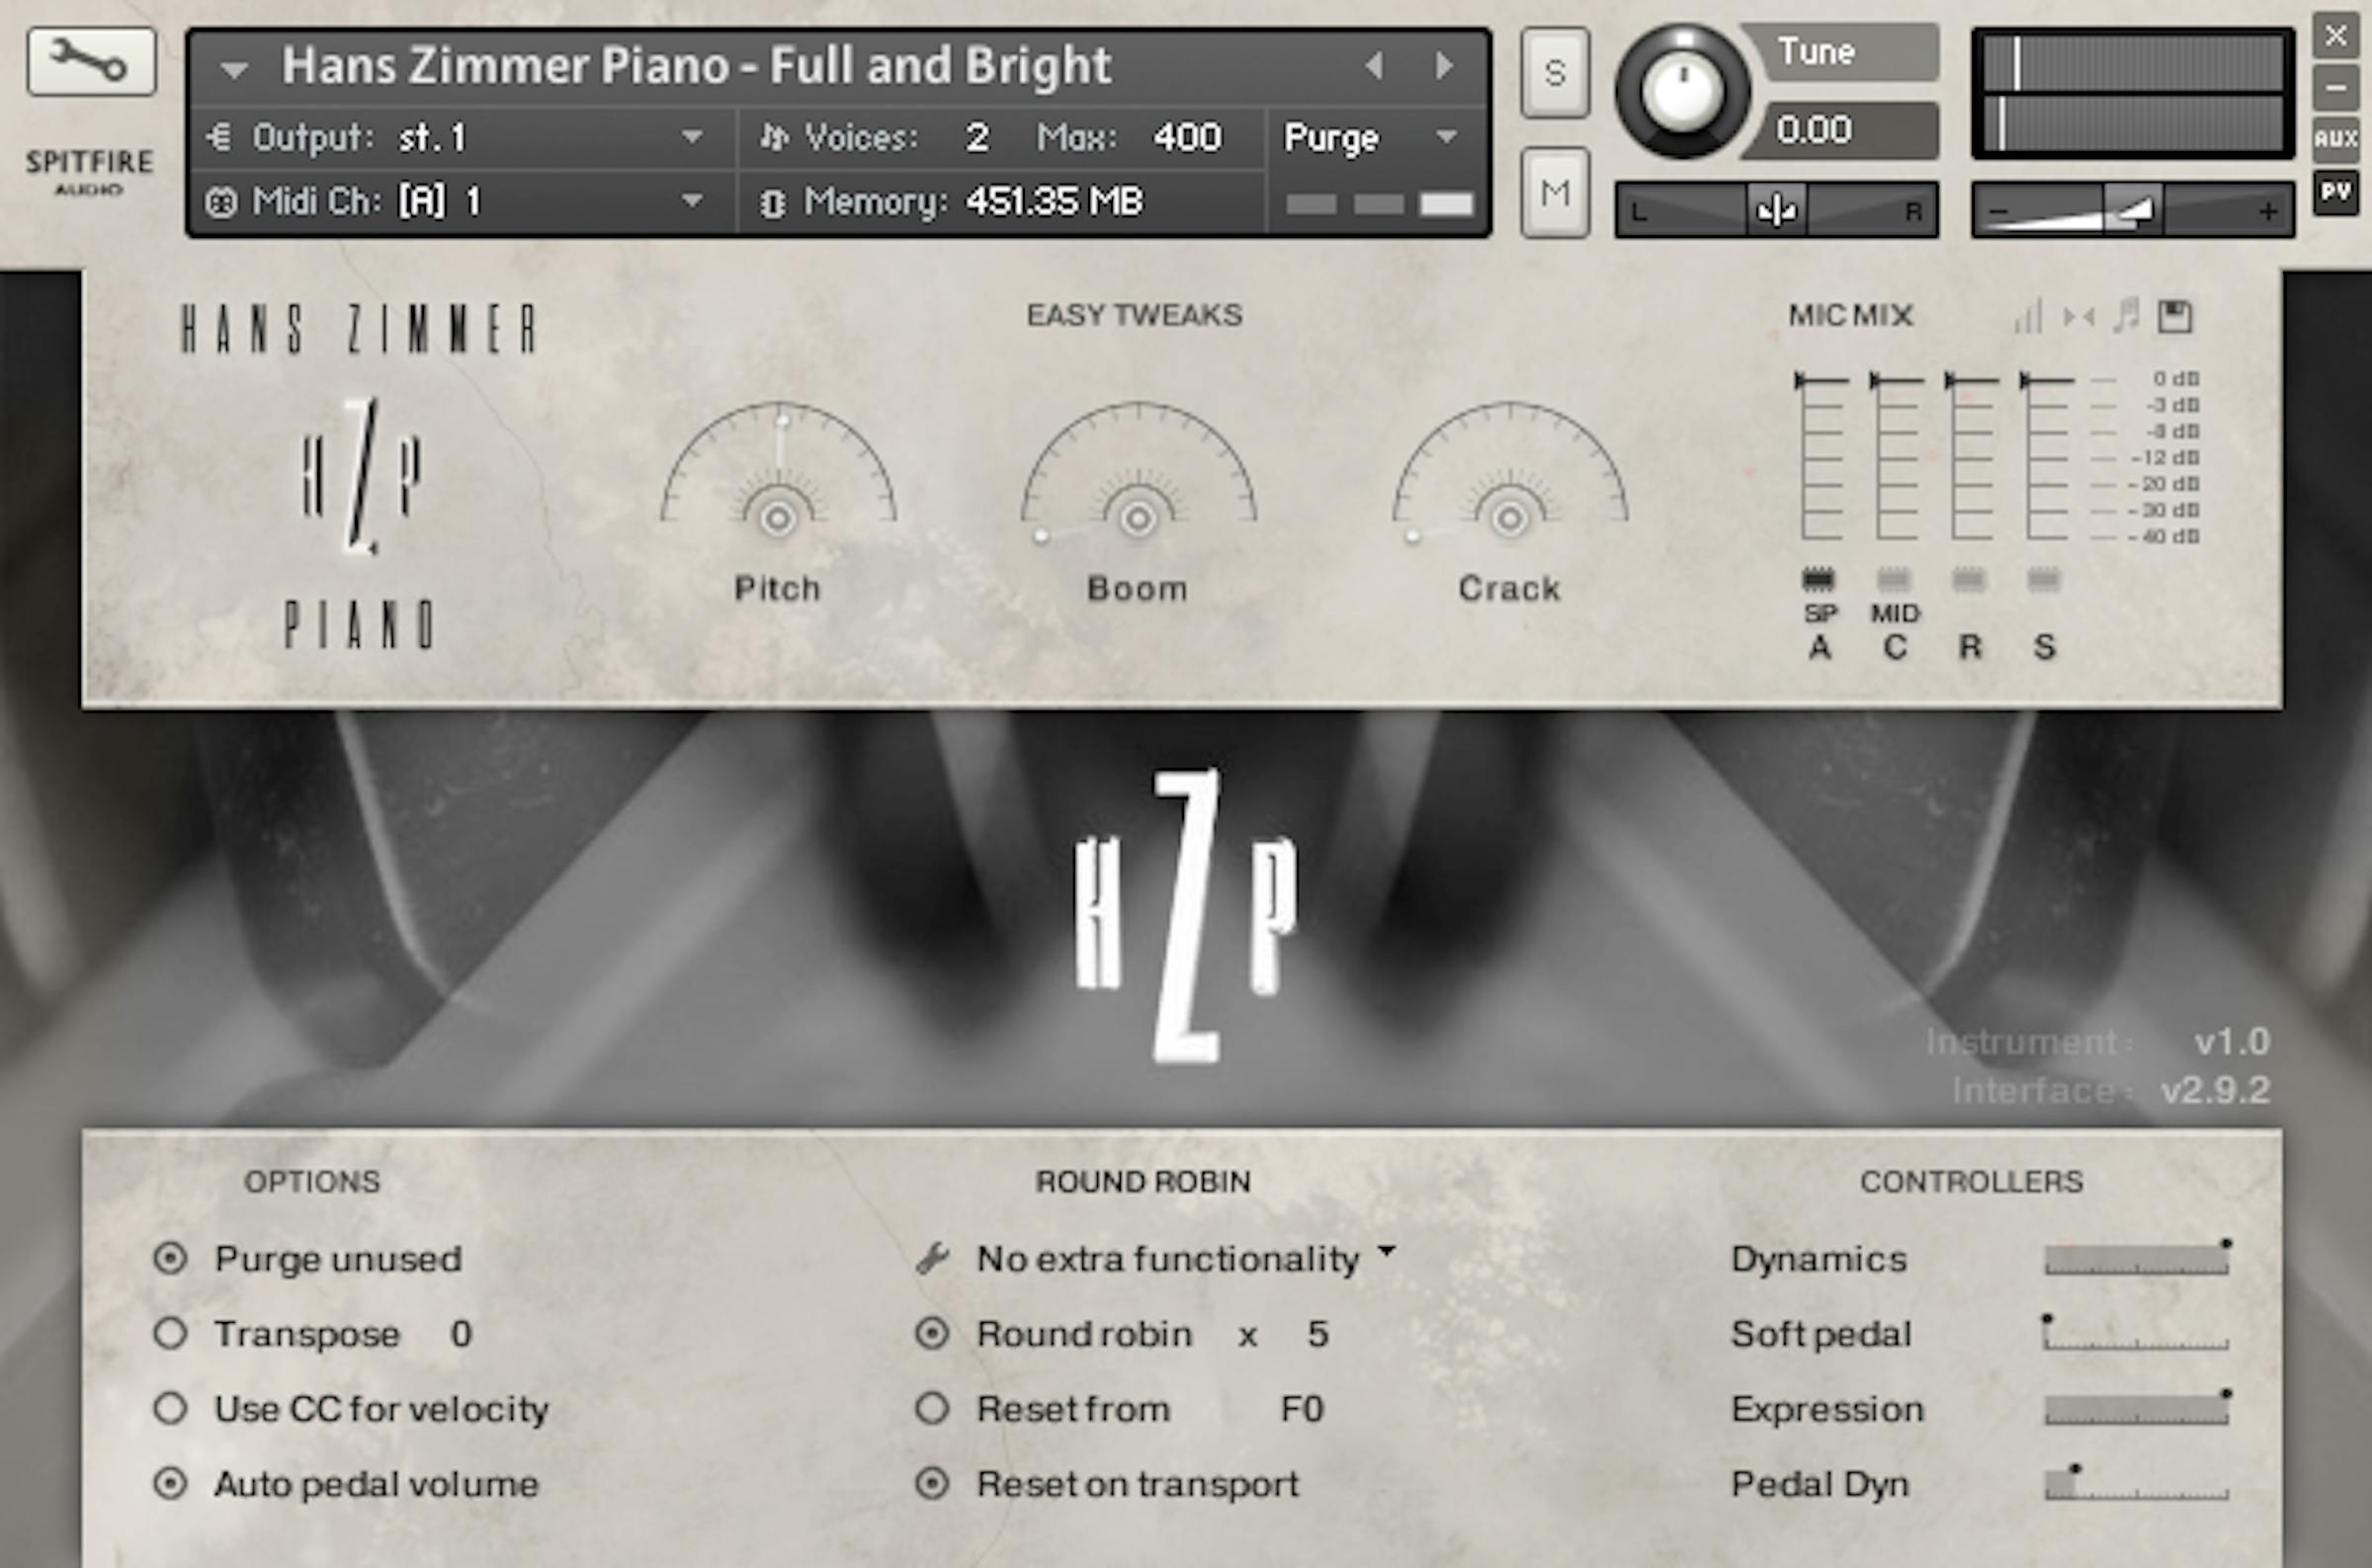 Hans Zimmer Piano general controls panel